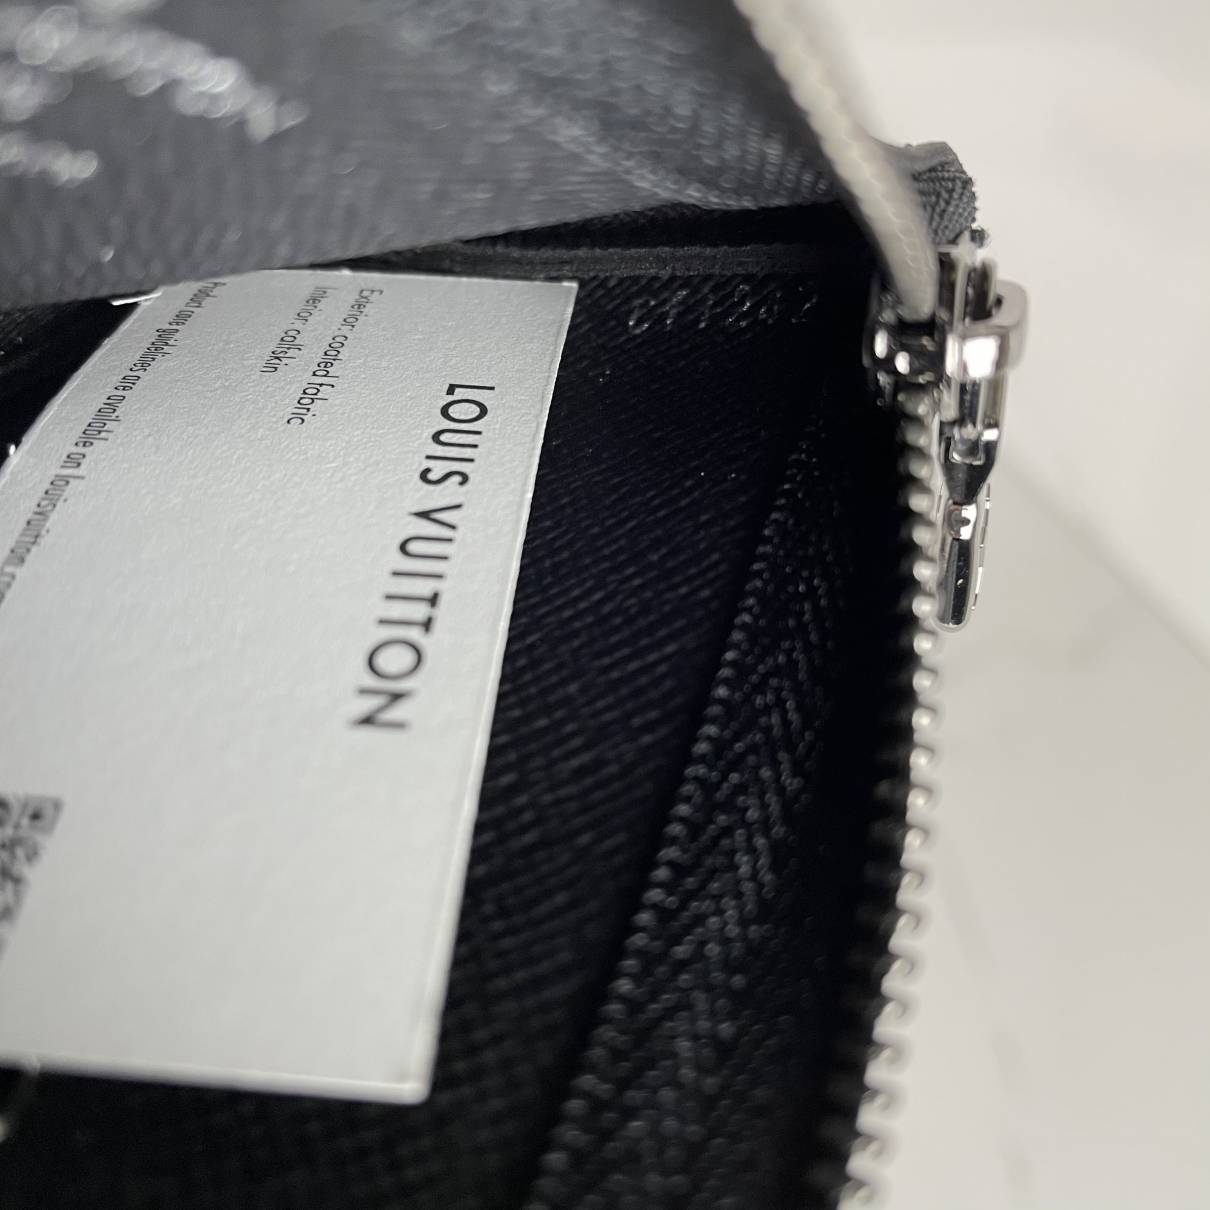 Louis Vuitton Louis Vuitton 3D Pocket Harness Vest In Dark Grey RRP £1950